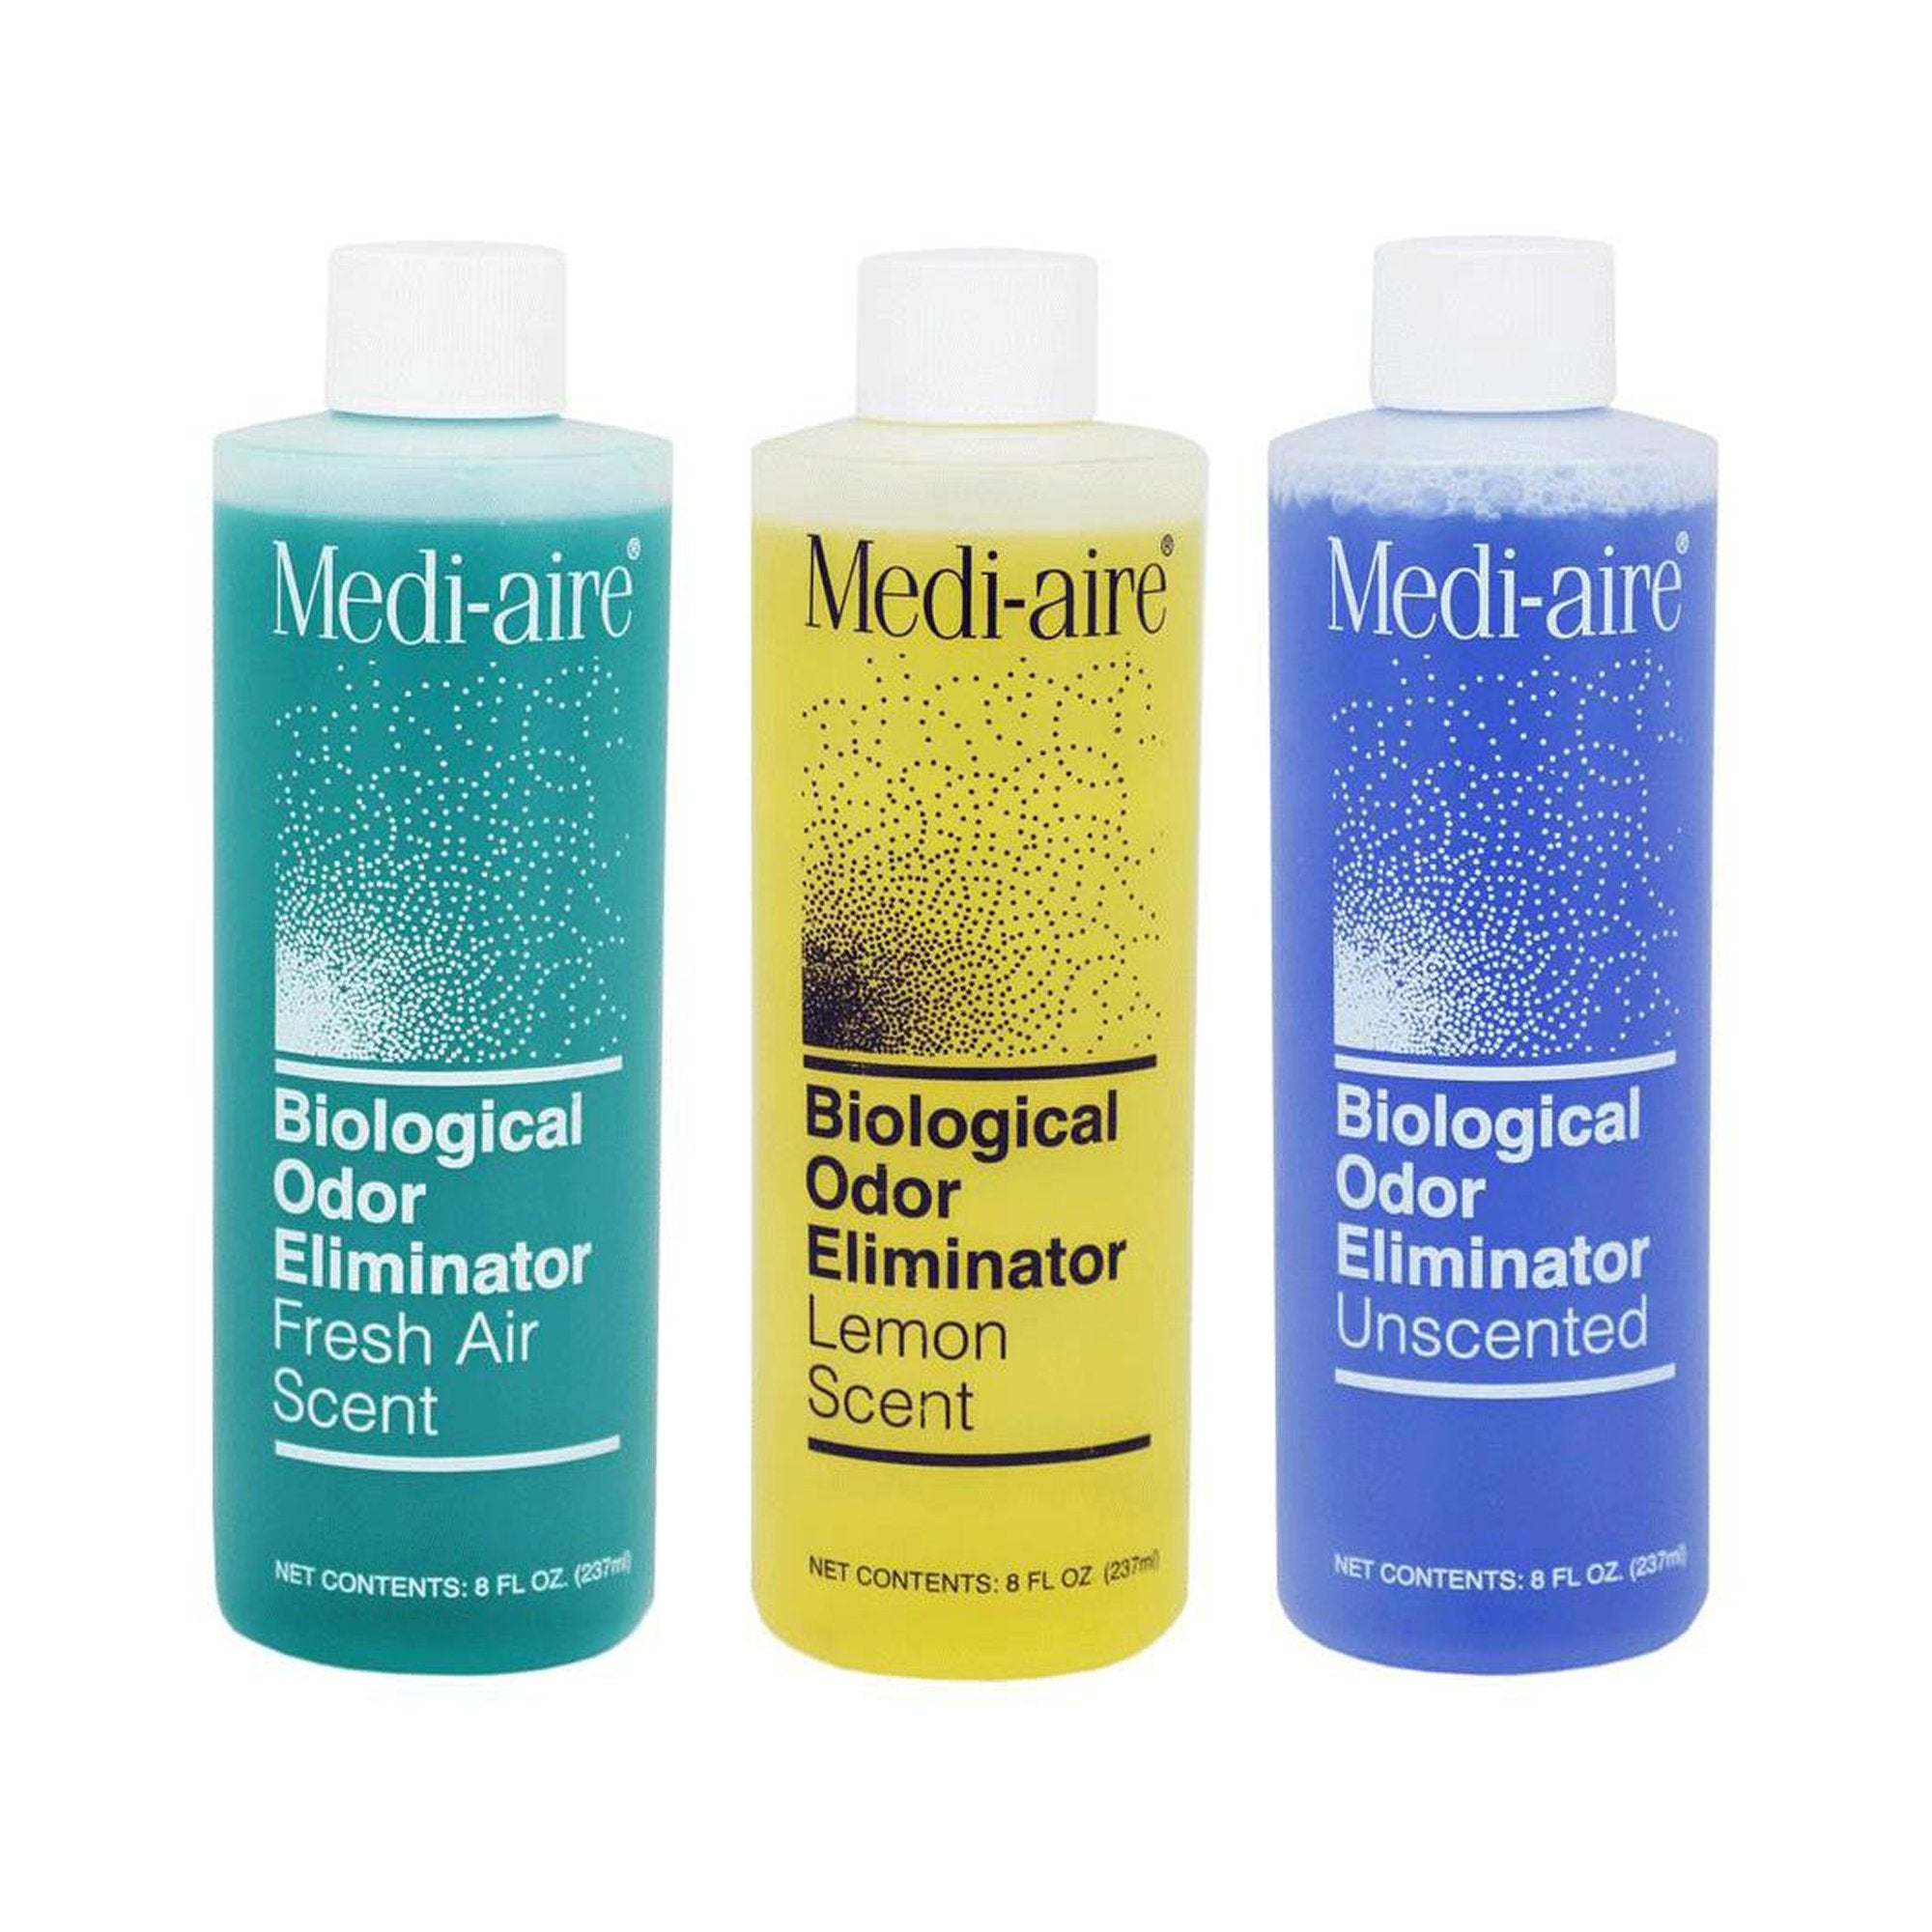 Deodorizer Refill Medi-aire Biological Odor Eliminator Liquid 8 oz. Bottle Fresh Air Scent